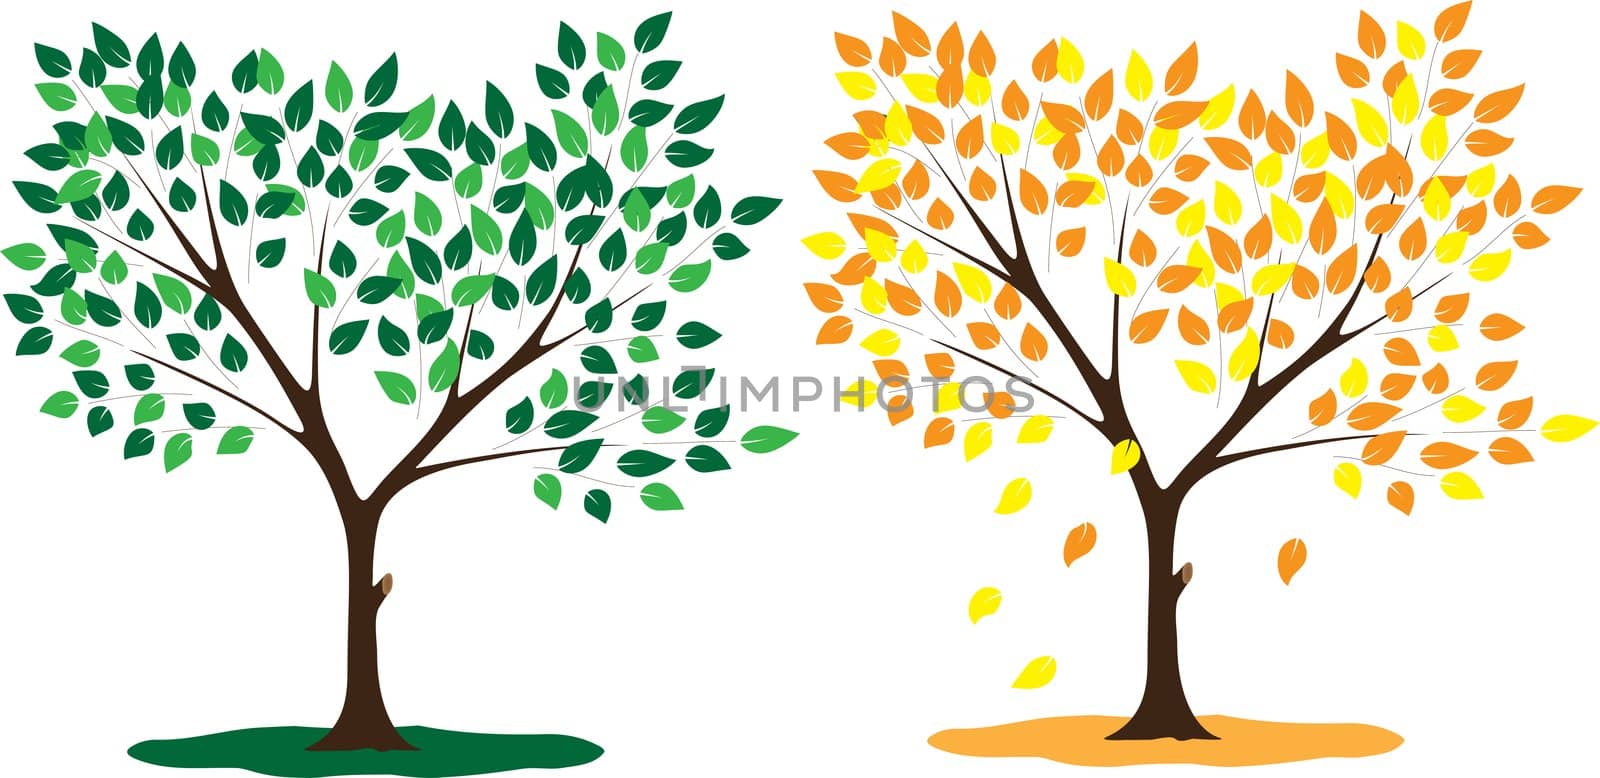 Tree seasons summer and autumn by rodakm